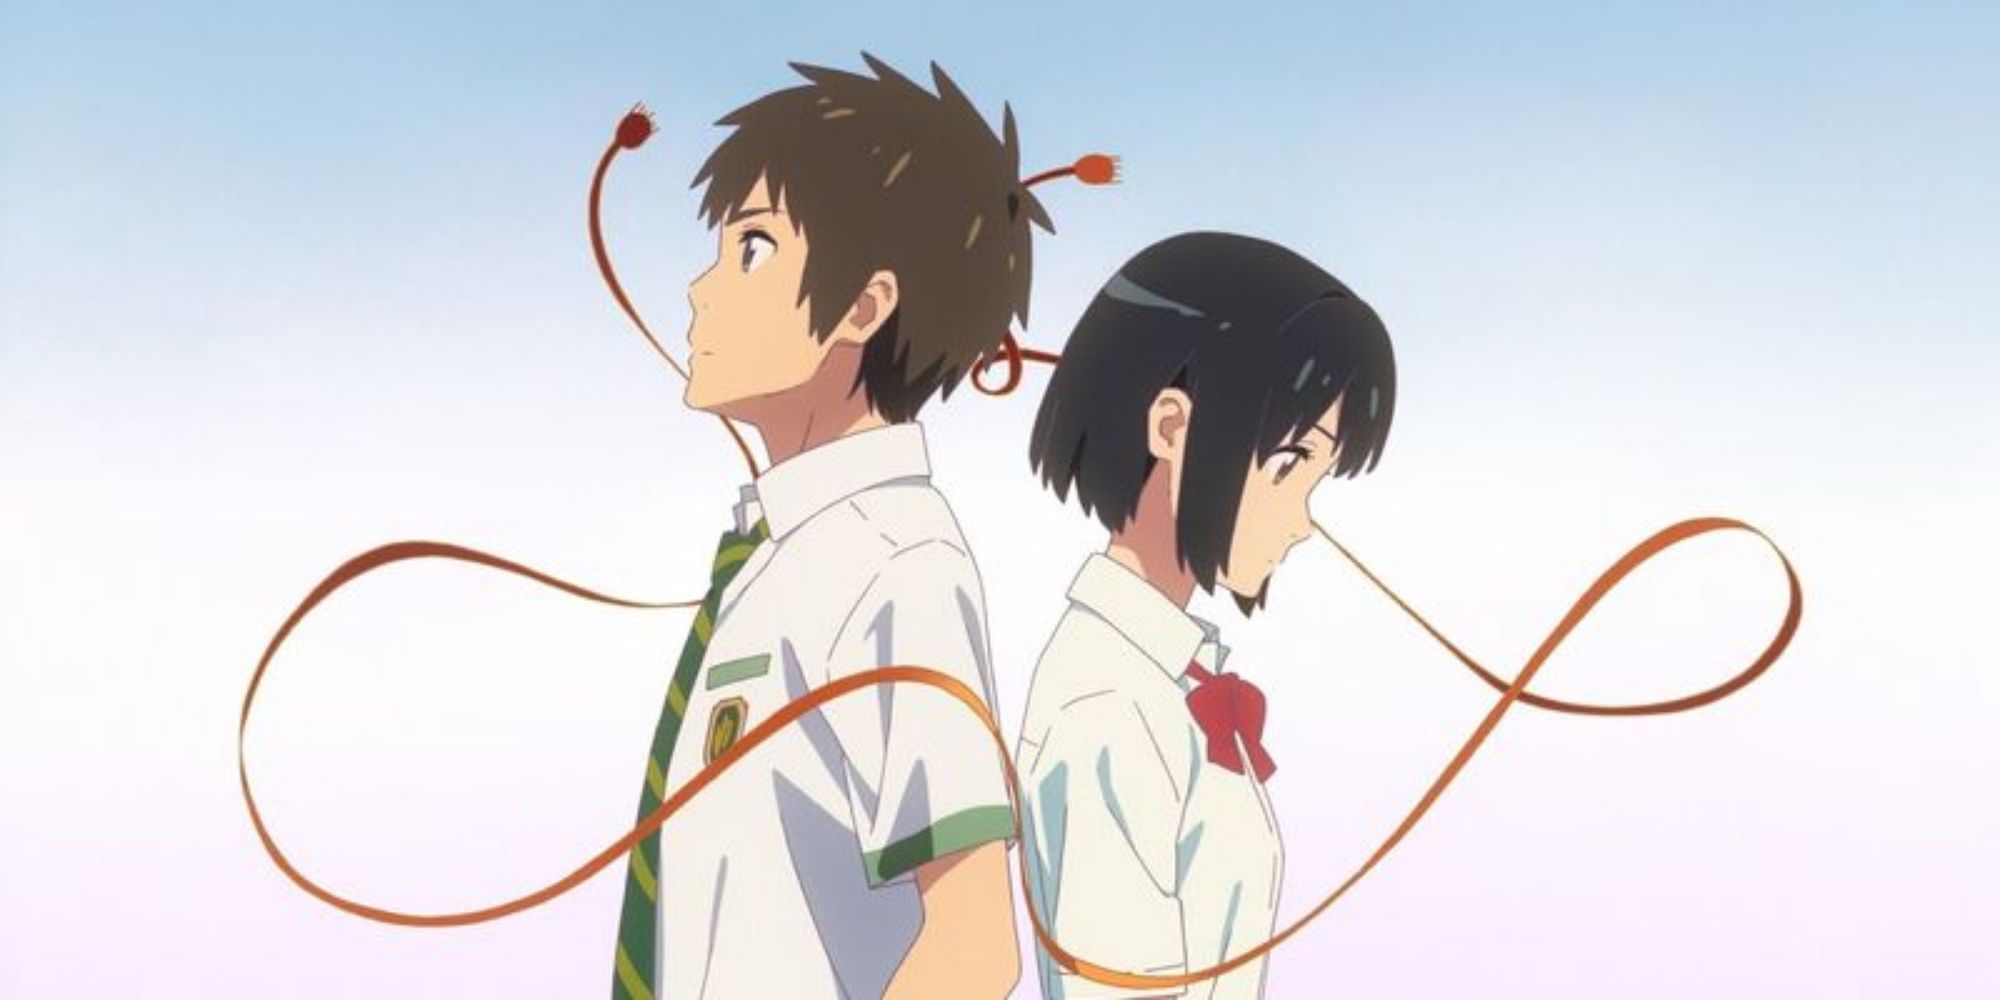 Taki Tachibana et Mitsuha Miyamizu dans l'anime Your Name.